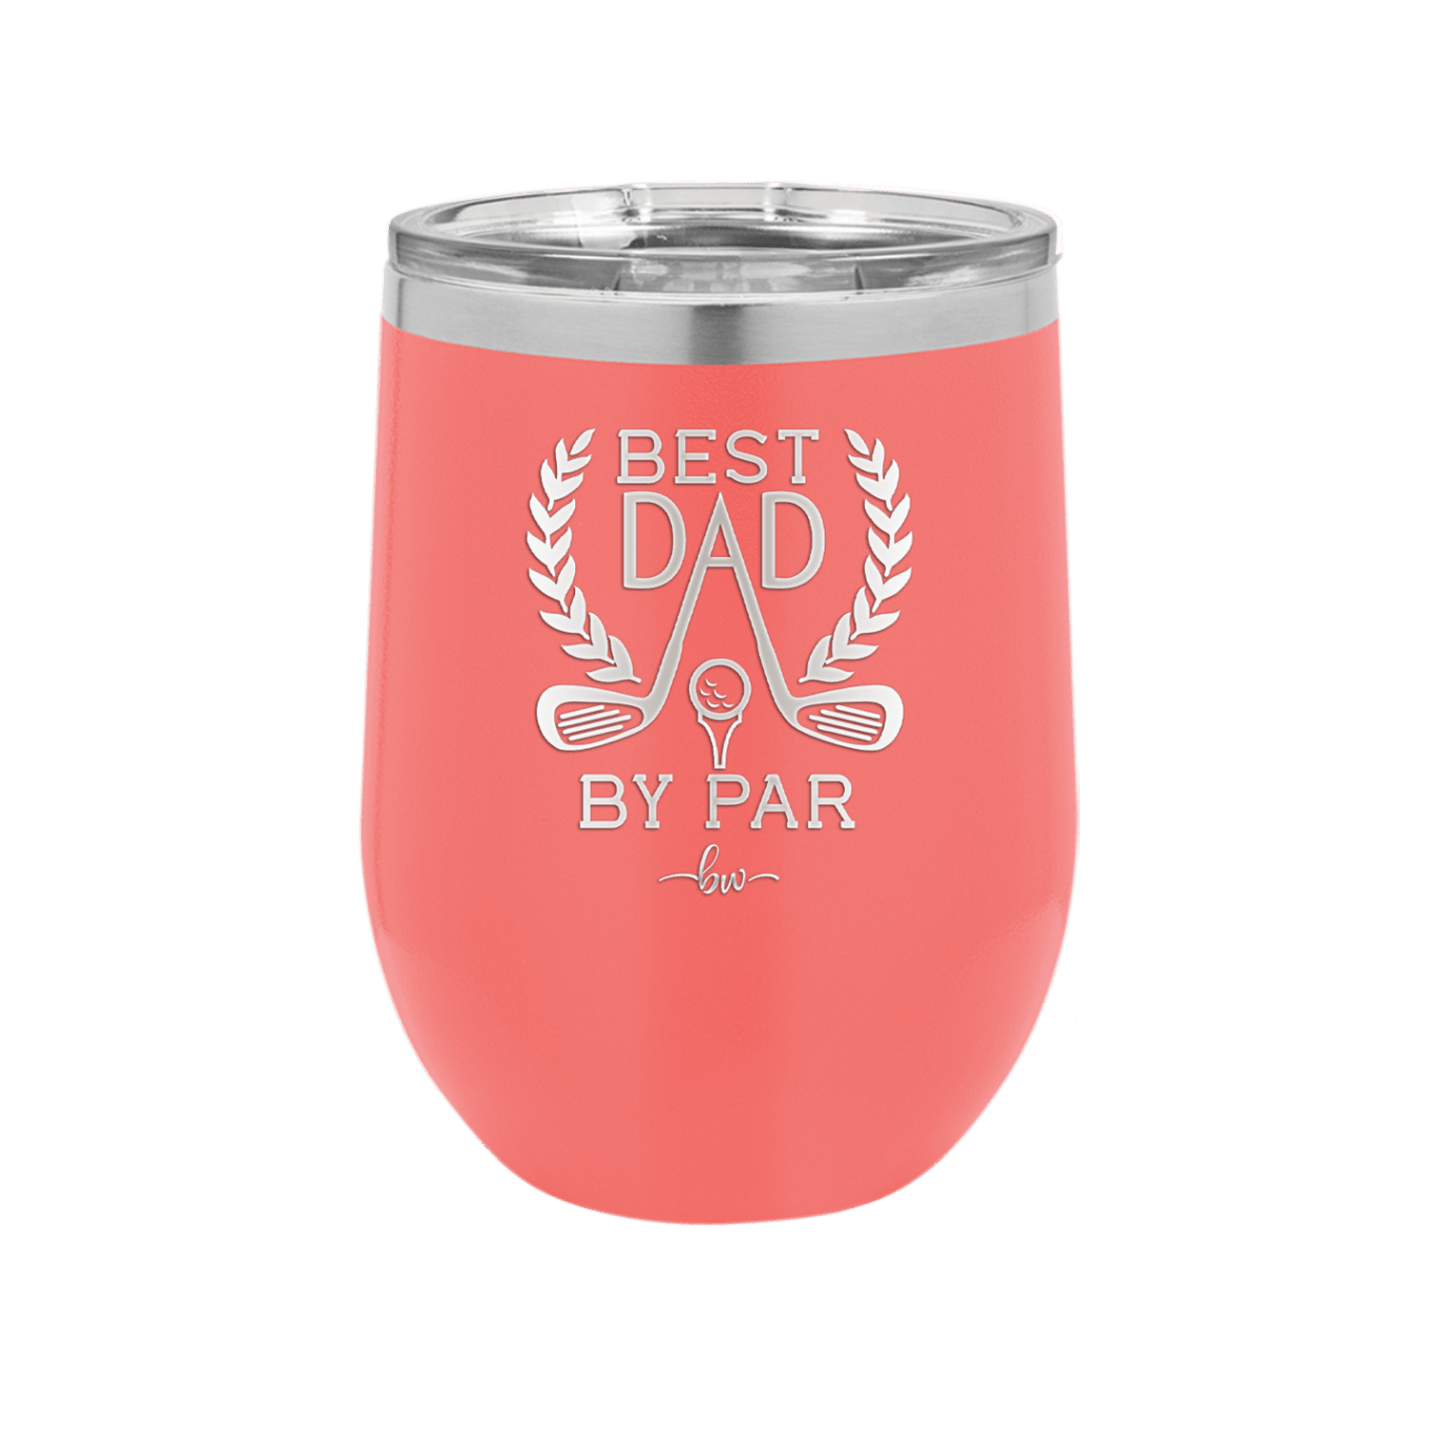 Best Dad by Par 3 Golf Dad - Laser Engraved Stainless Steel Drinkware - 1652 -